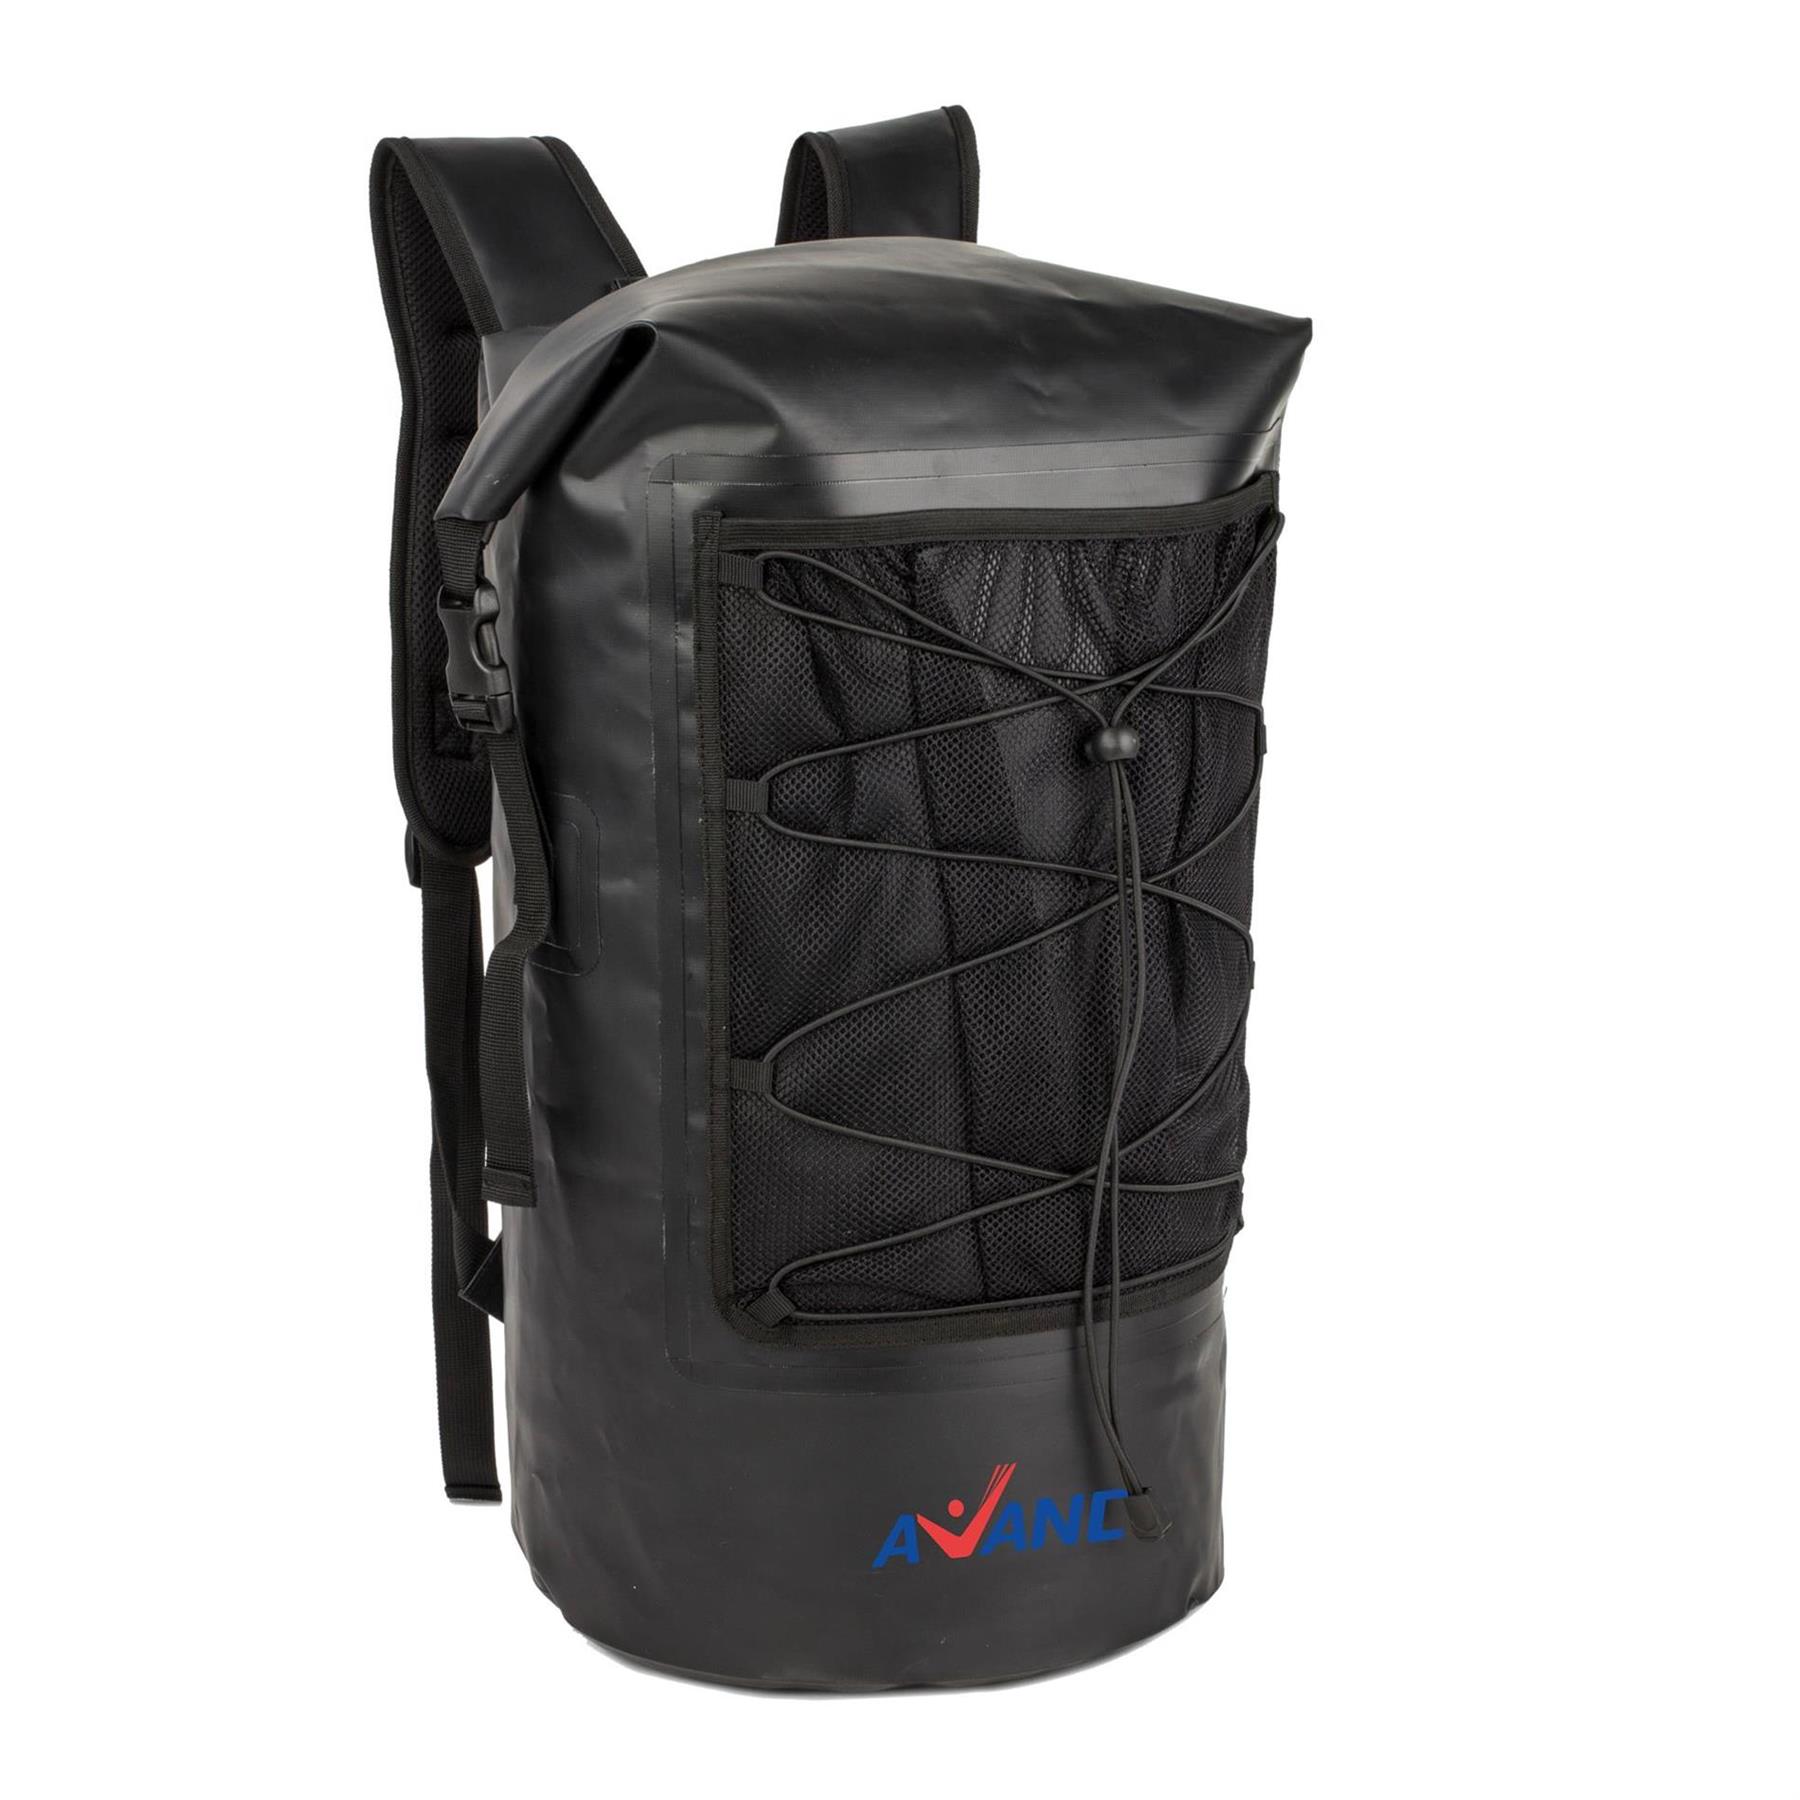 Roll Top Seal Waterproof Bag, Sport Rucksack With Mesh Pocket 35L